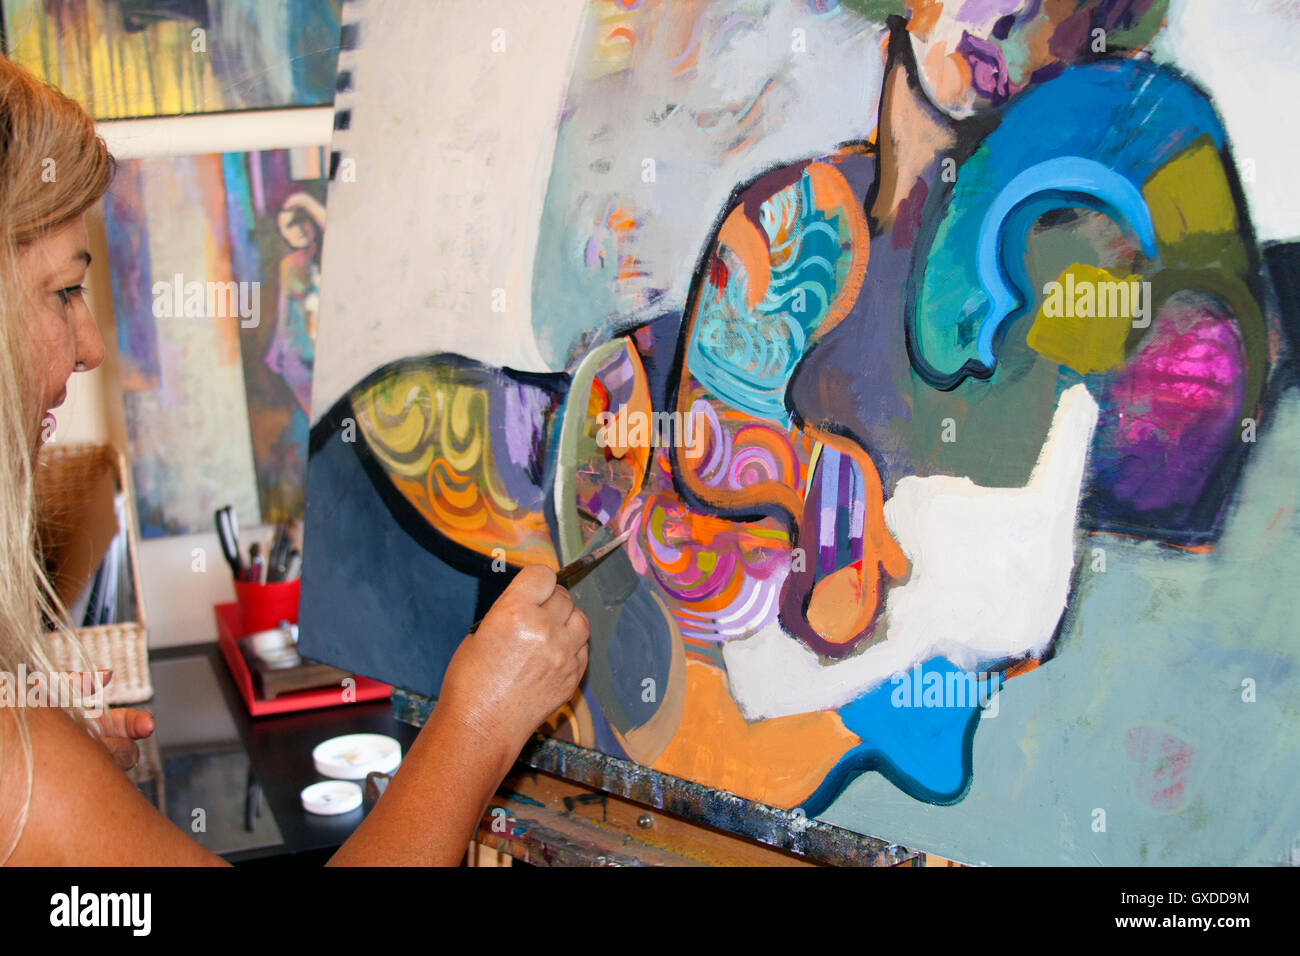 Artist painting artwork on canvas Stock Photo